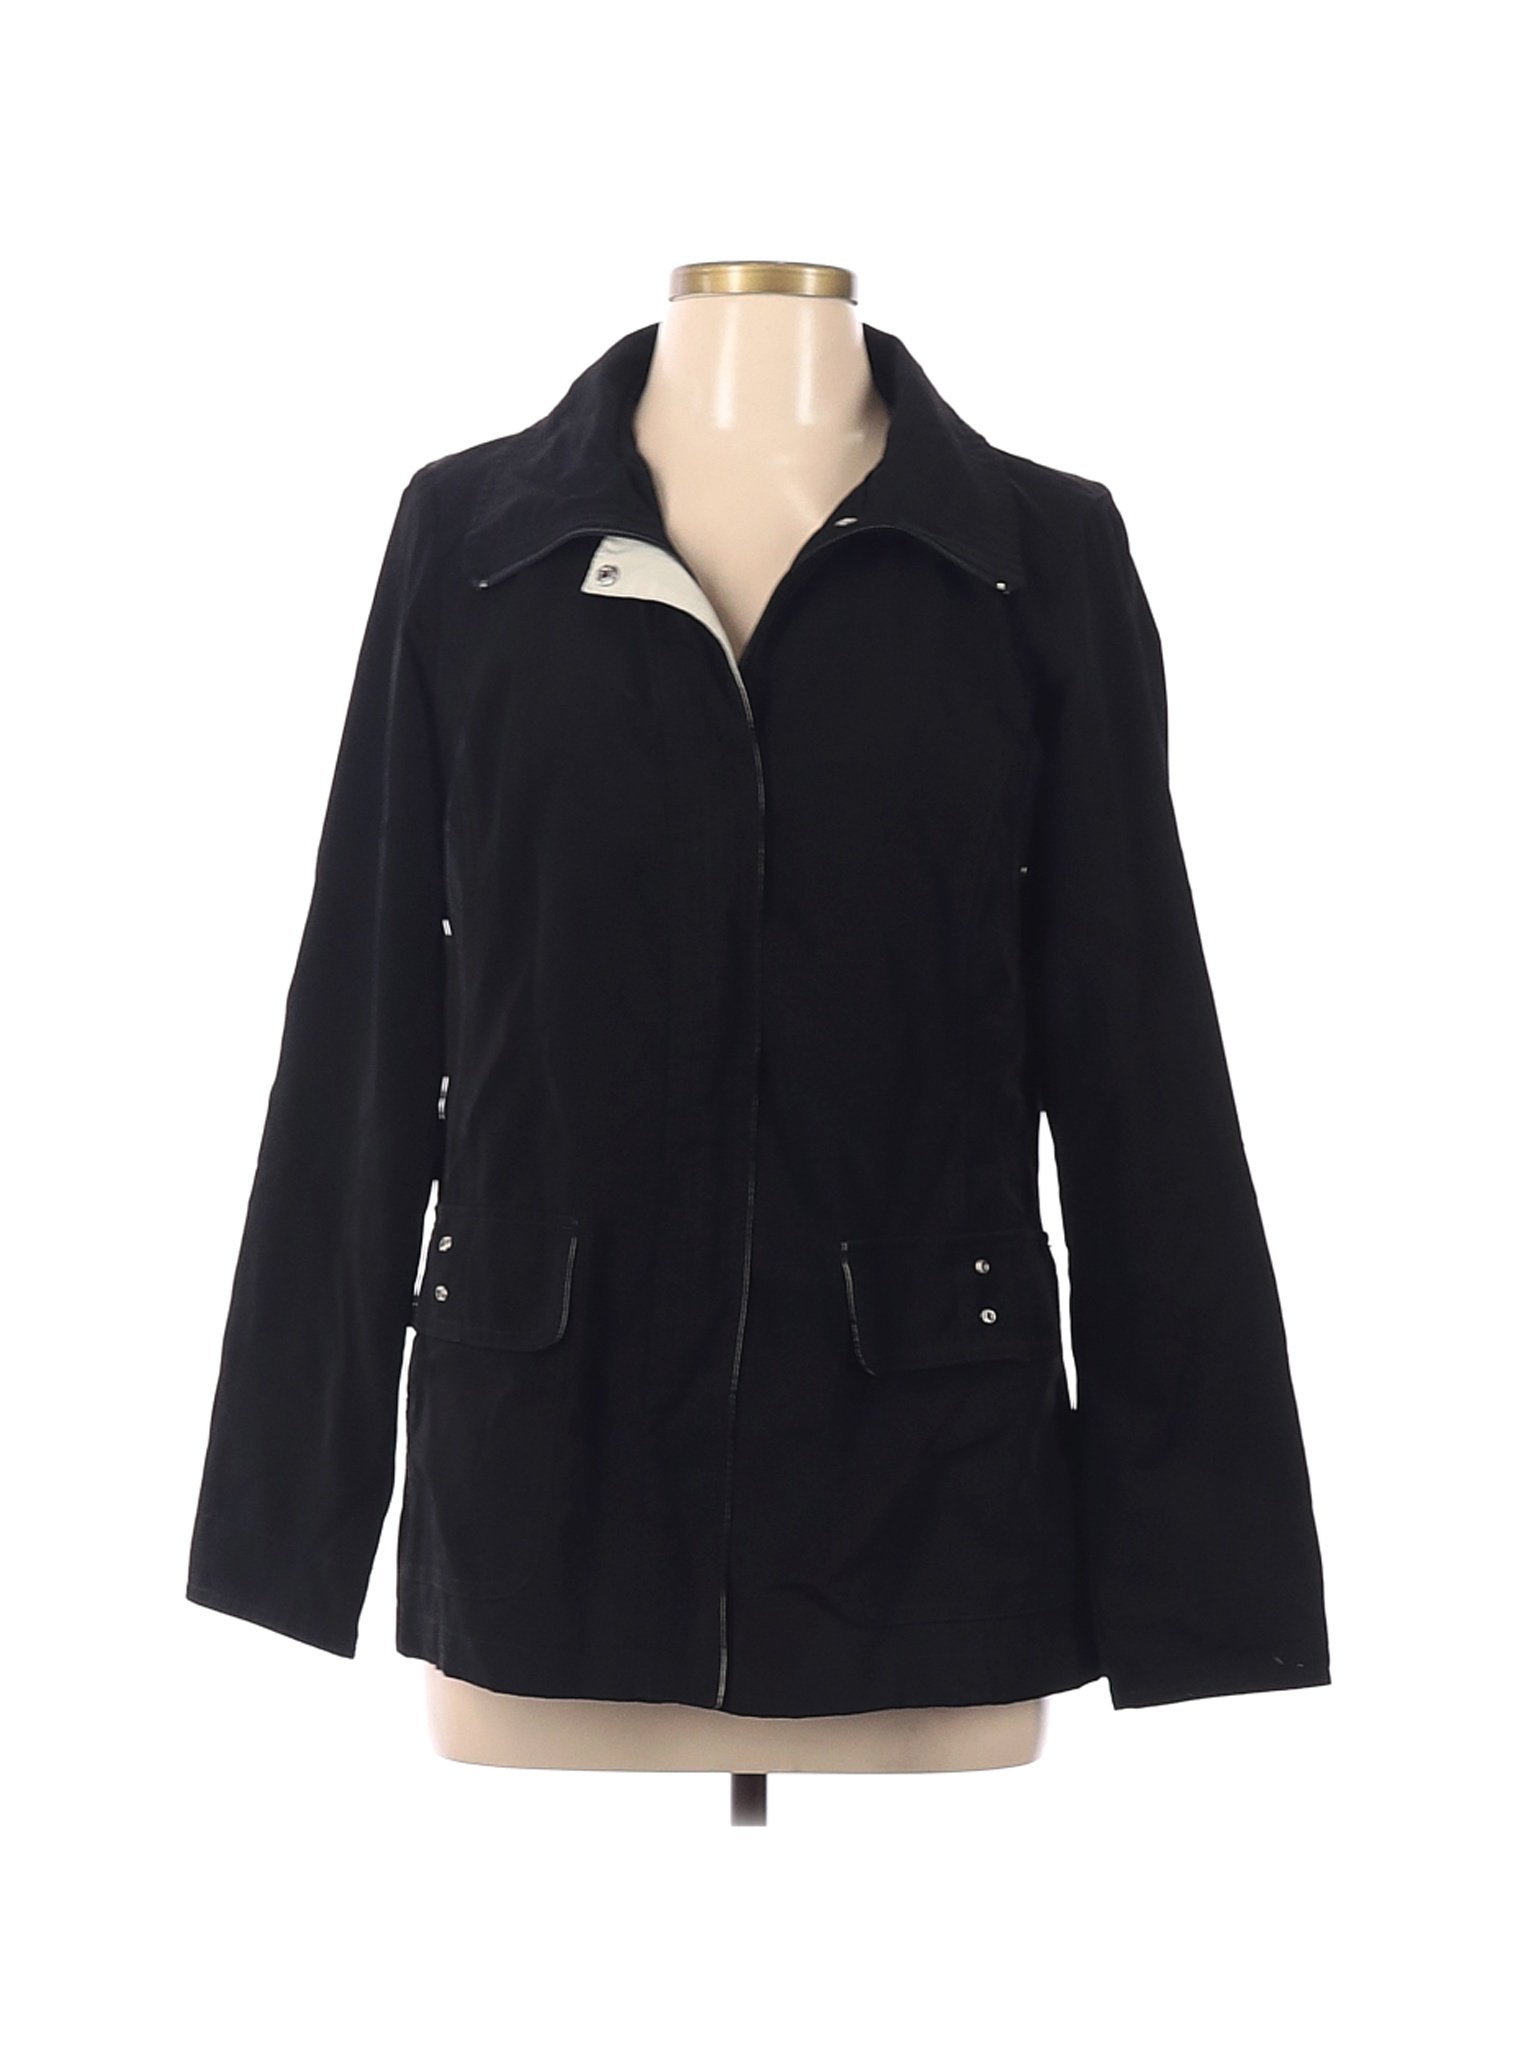 Weather Tamer Women Black Jacket M | eBay